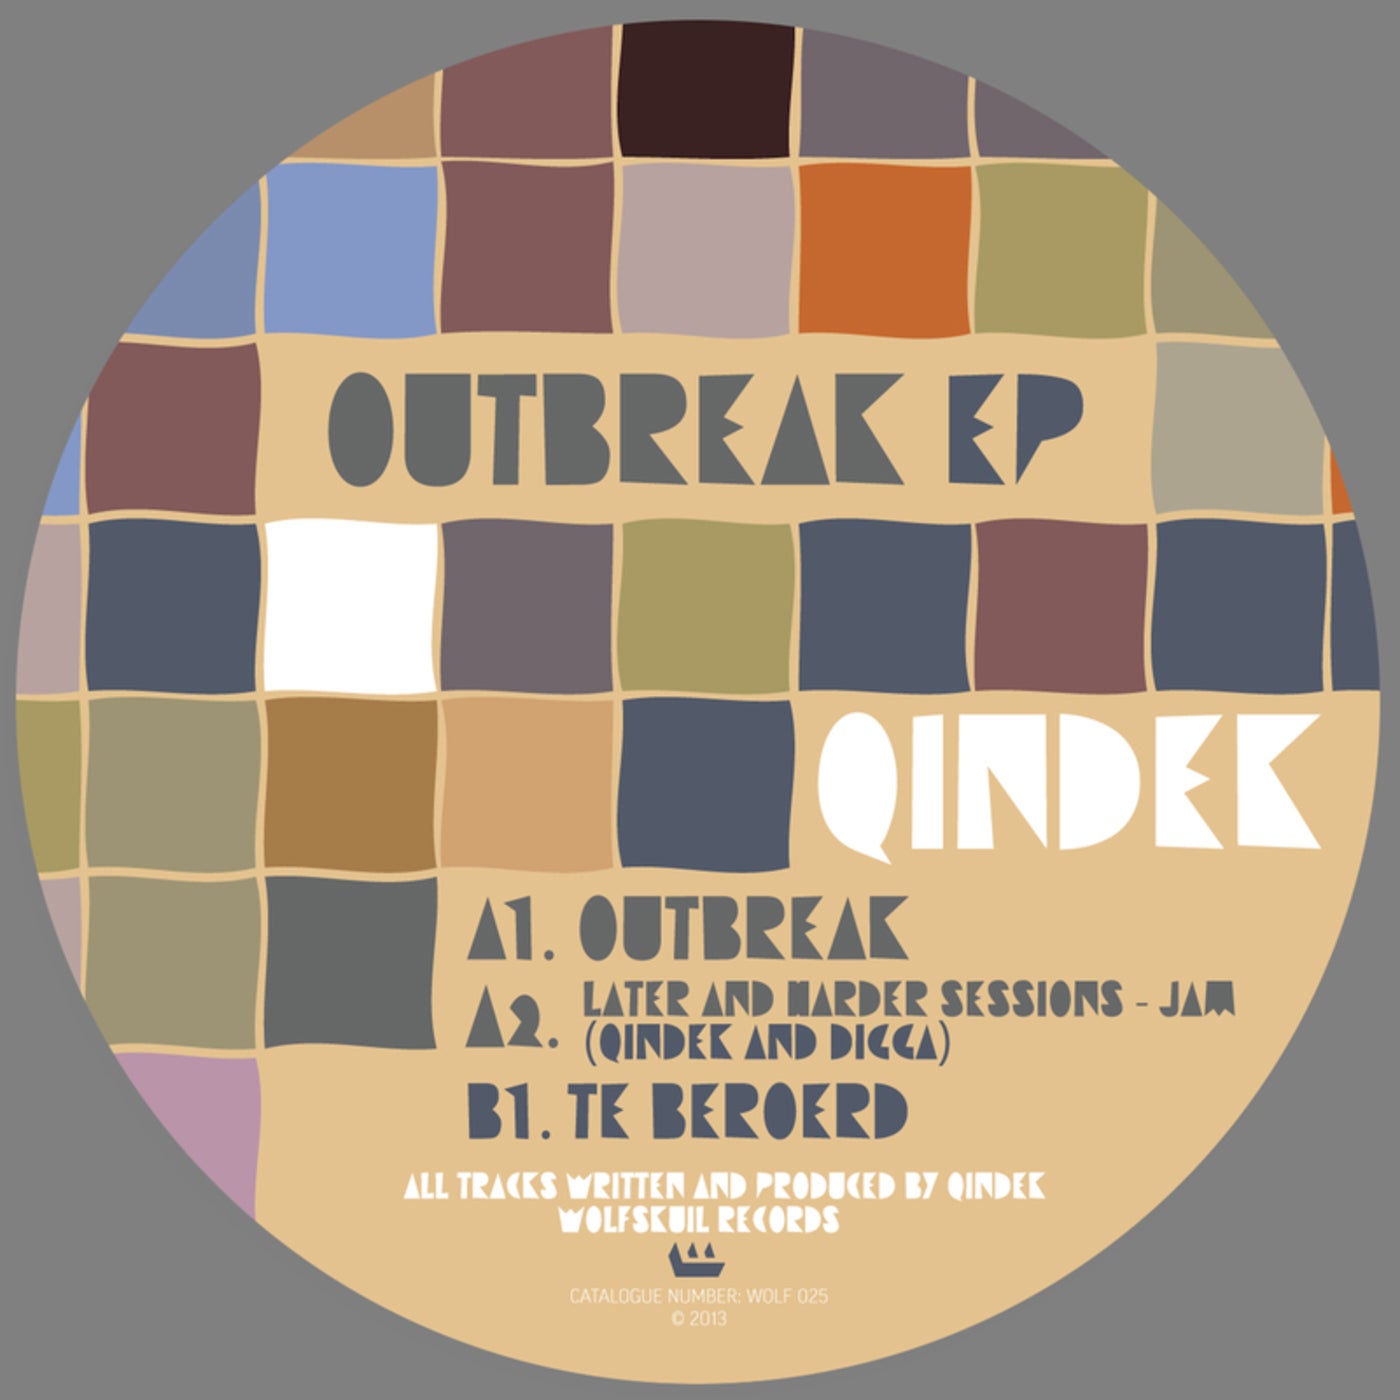 Outbreak EP